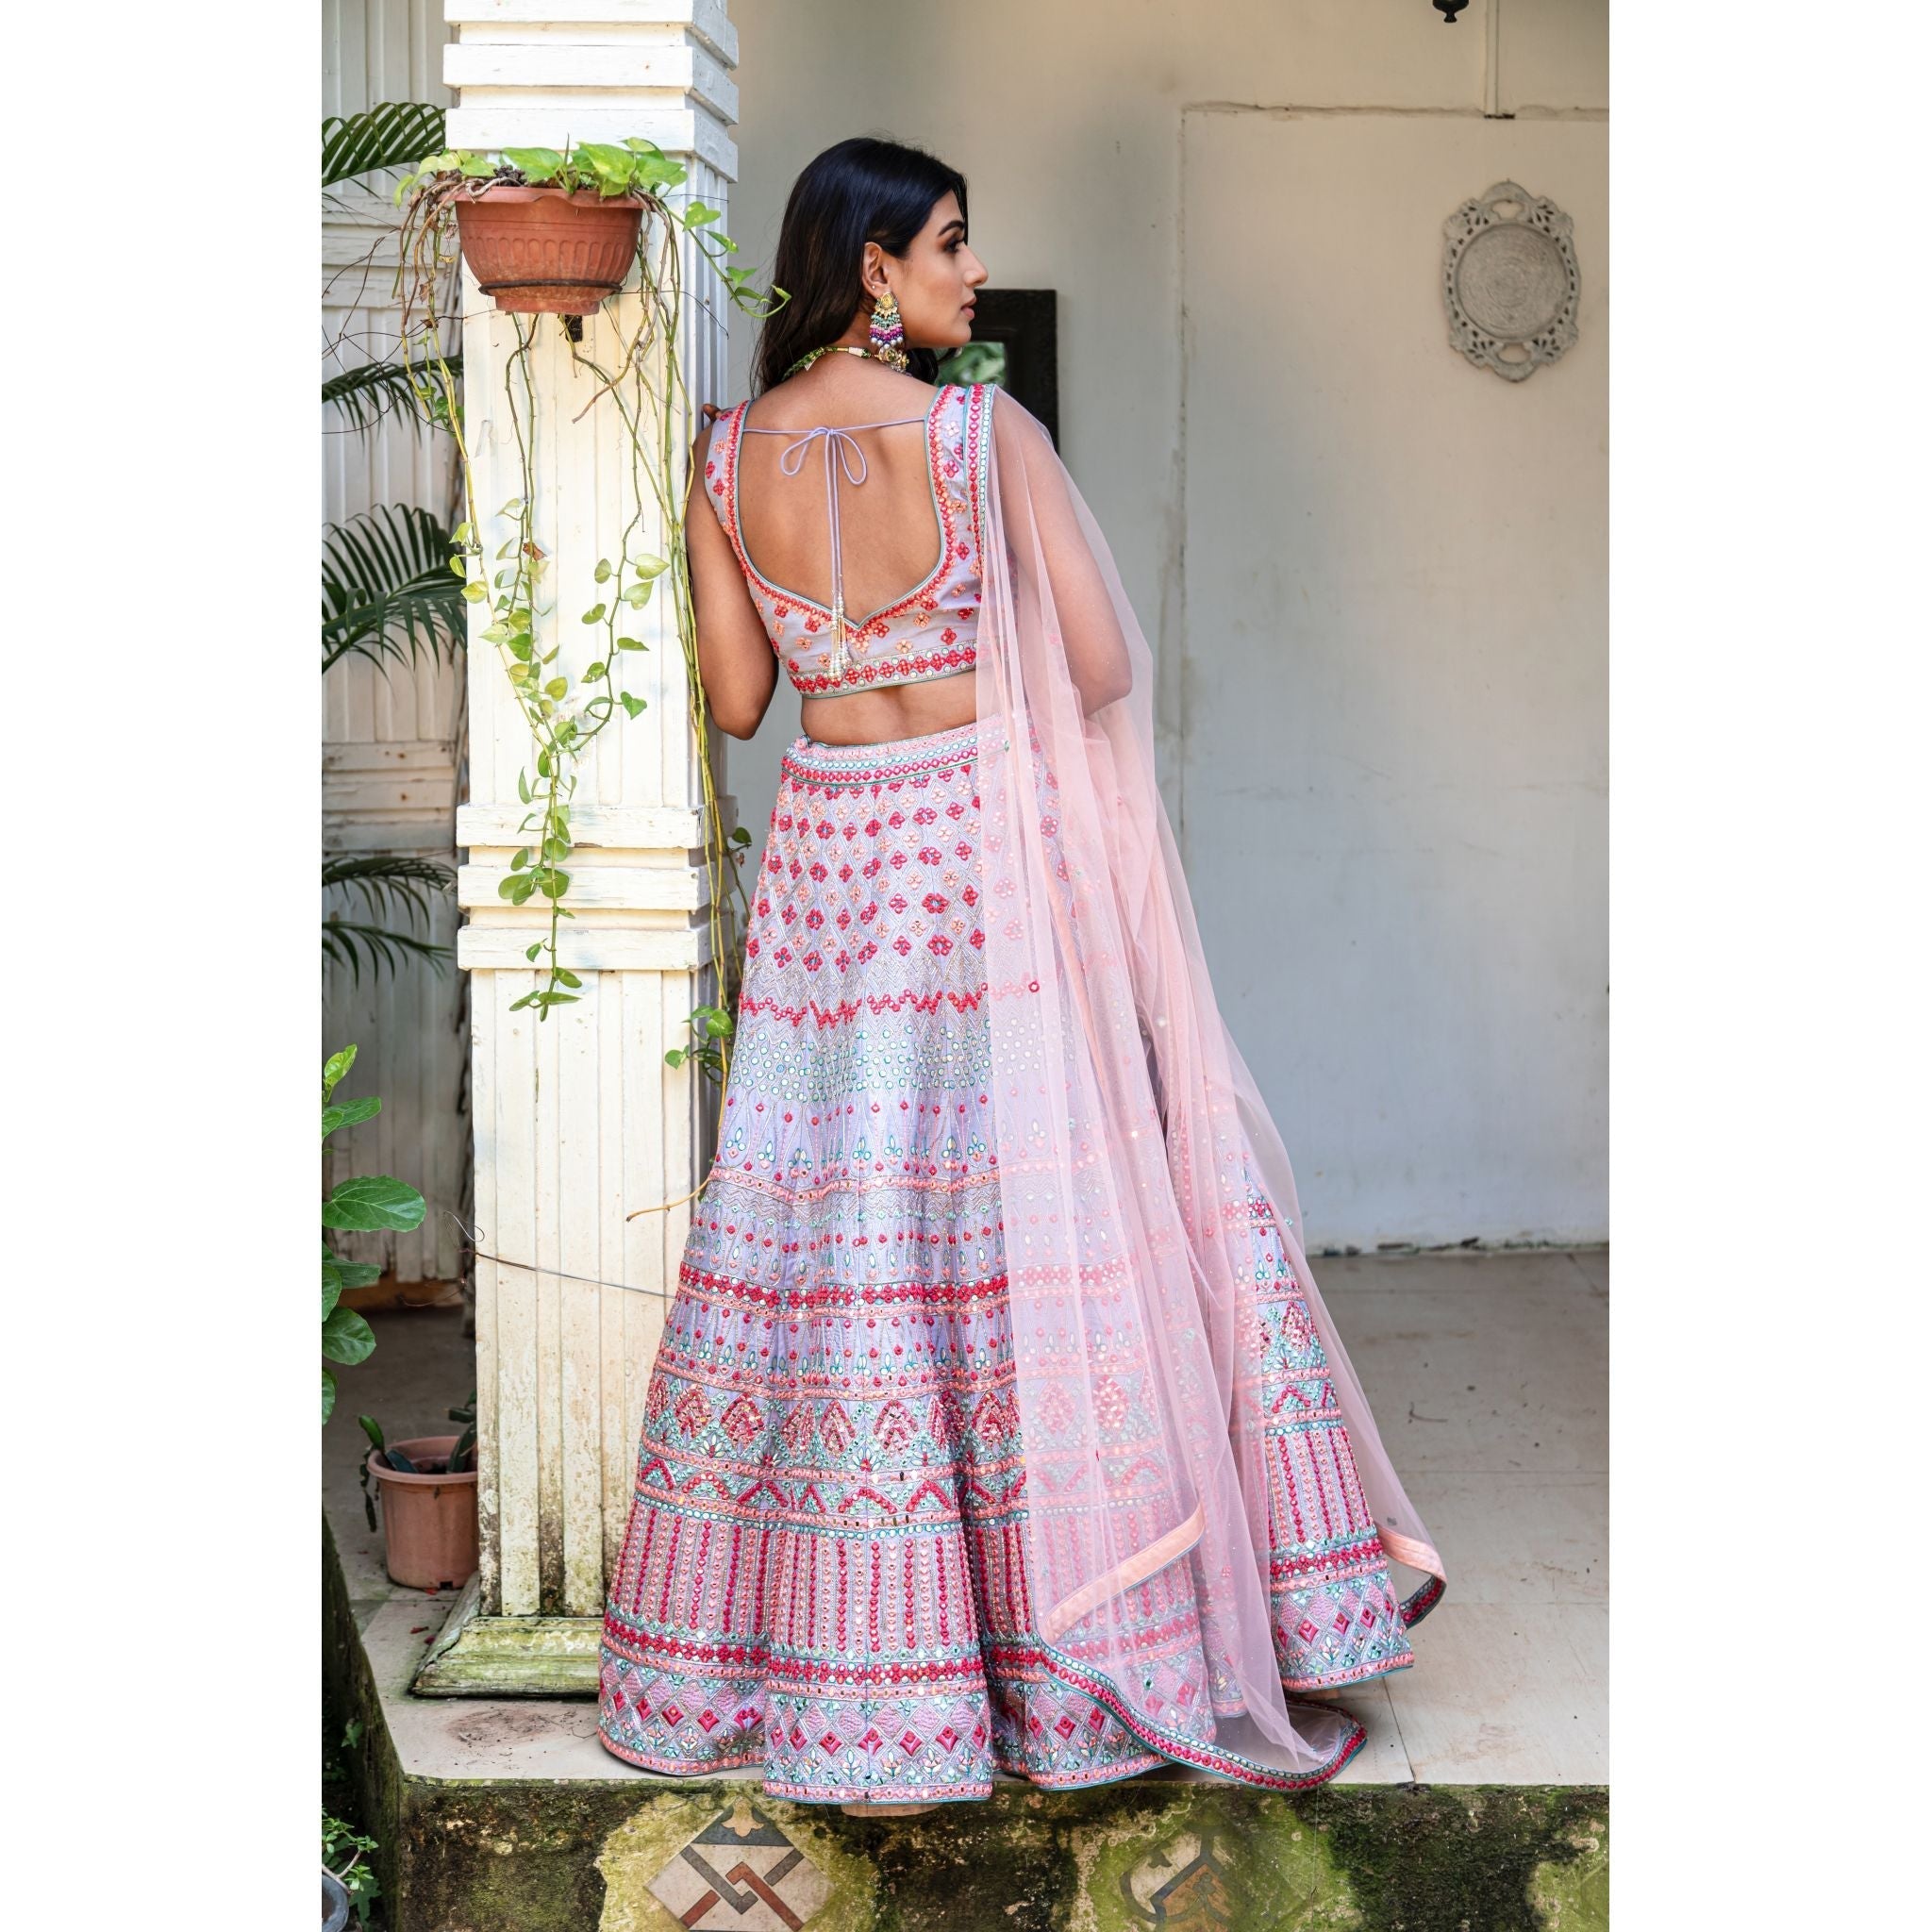 Lavender Multicolored Mirrorwork Lehenga Set - Indian Designer Bridal Wedding Outfit